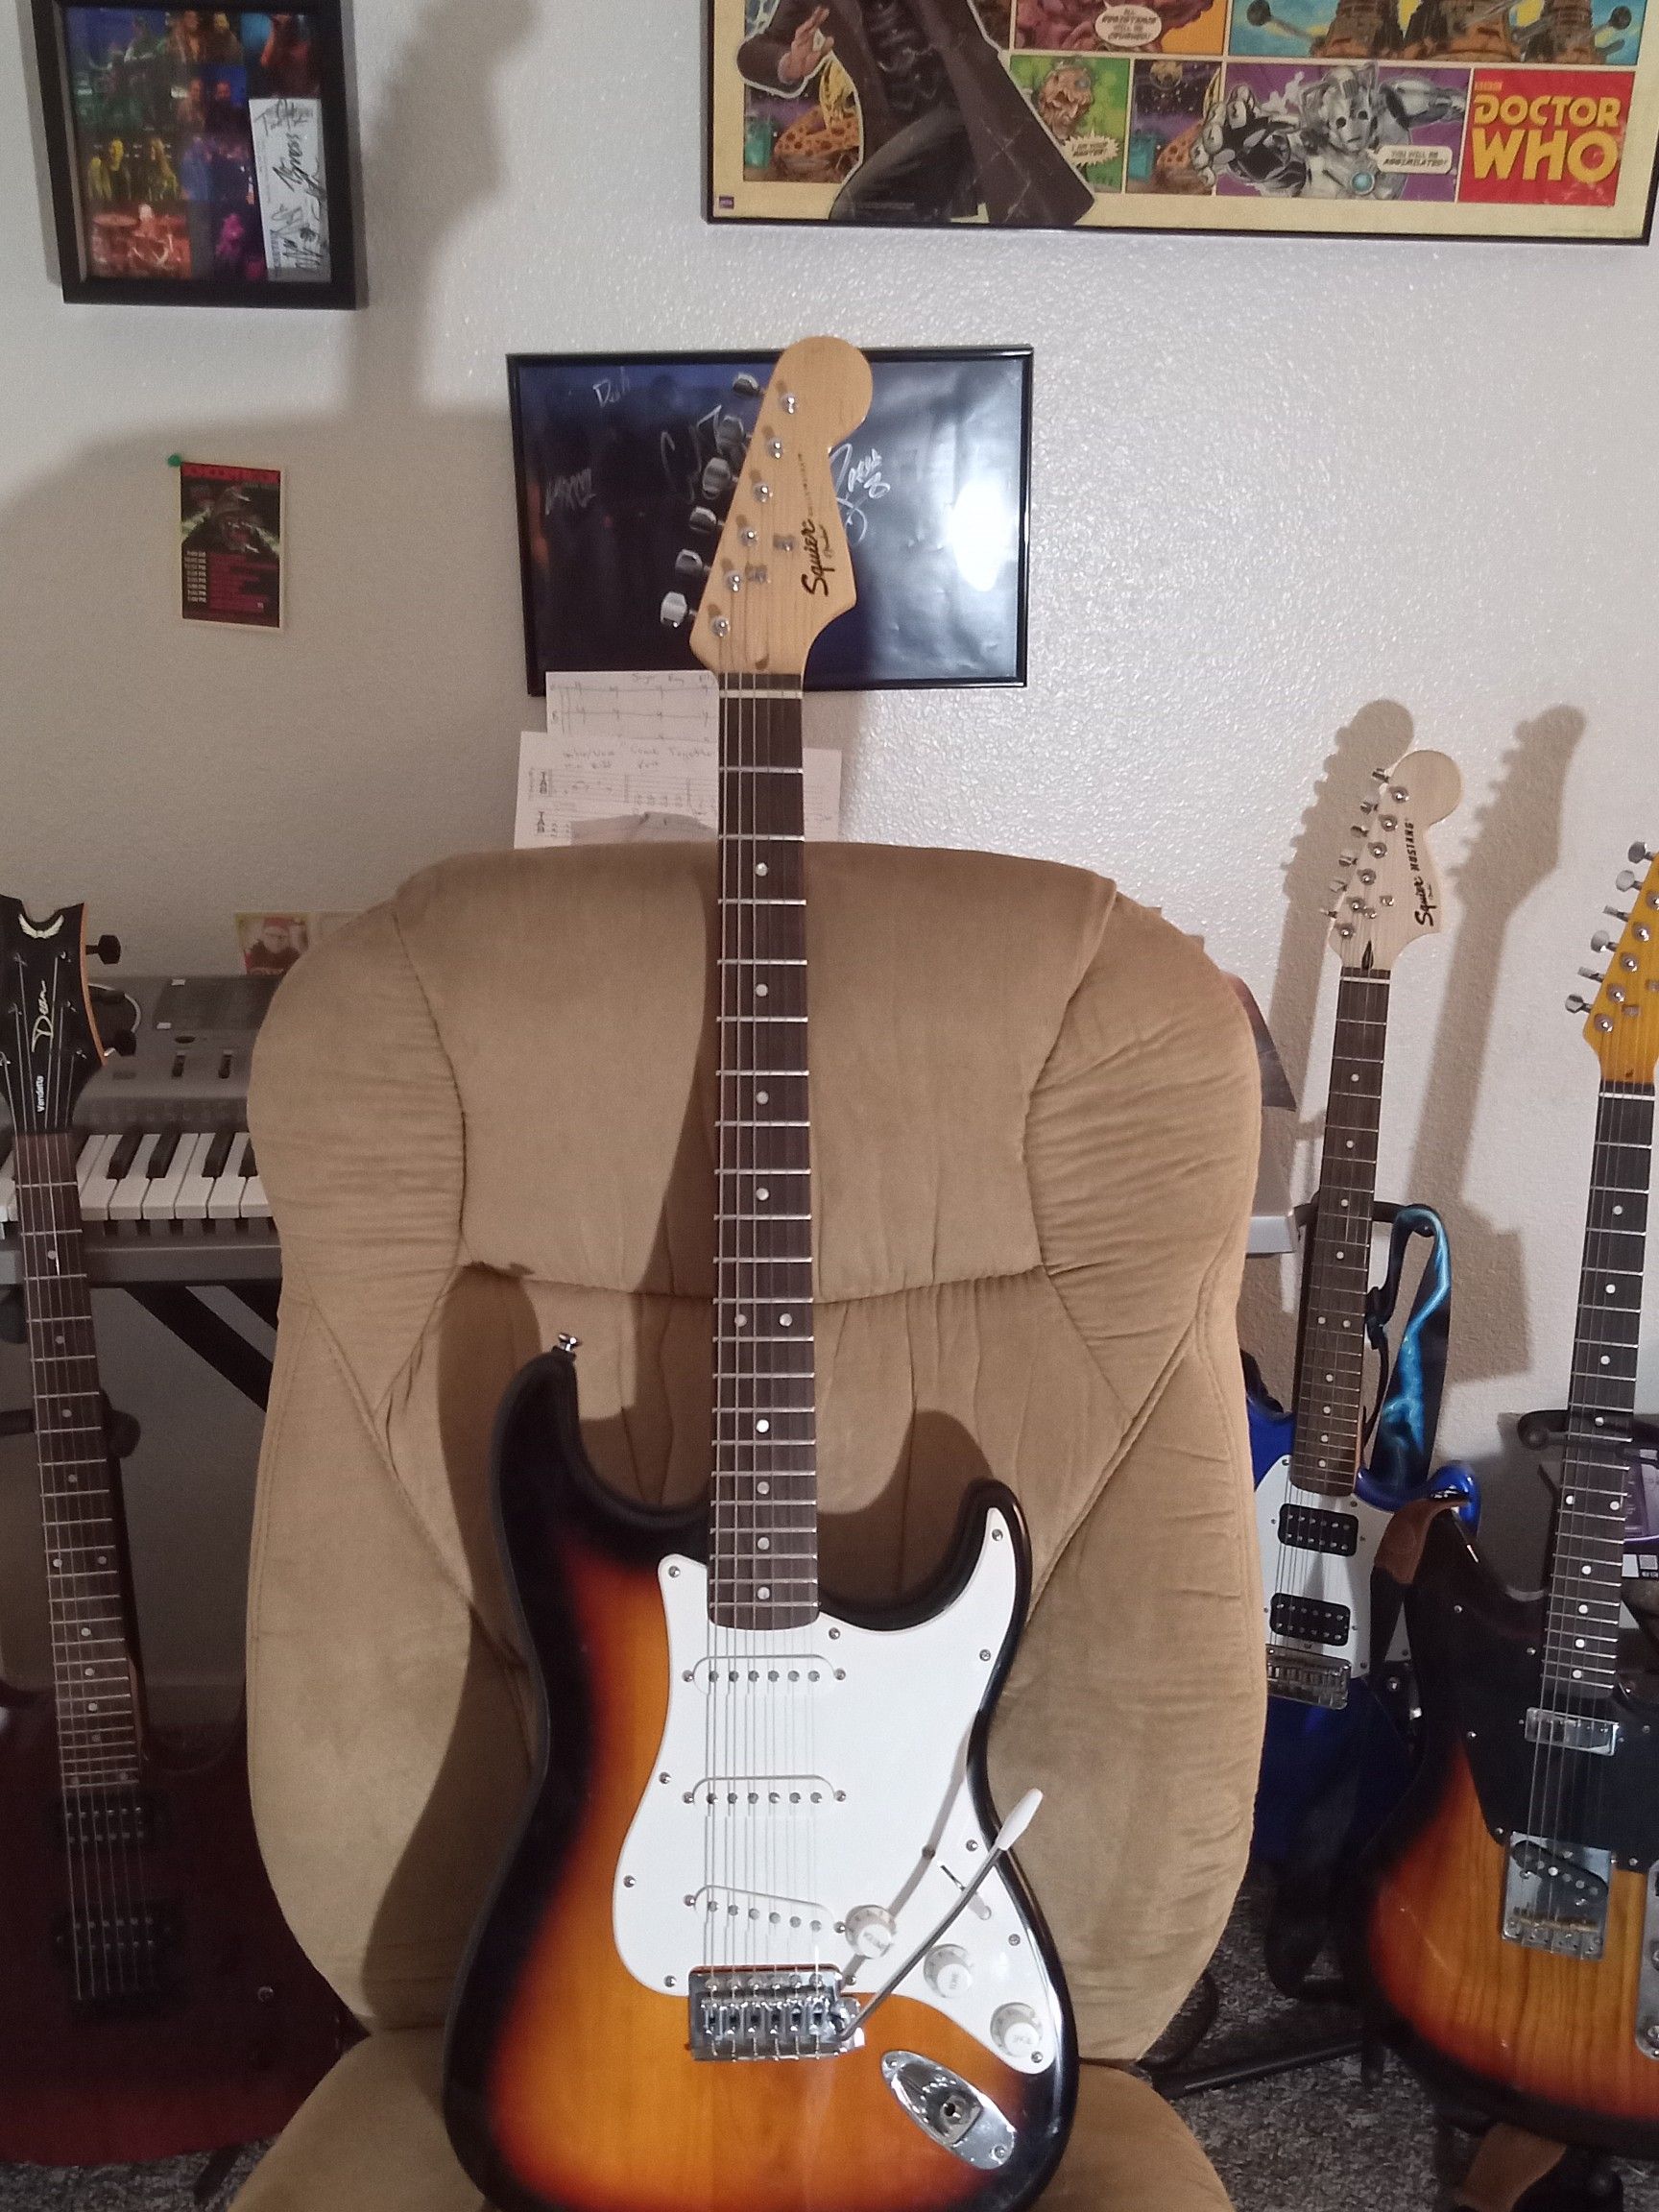 Squier Fender Stratocaster